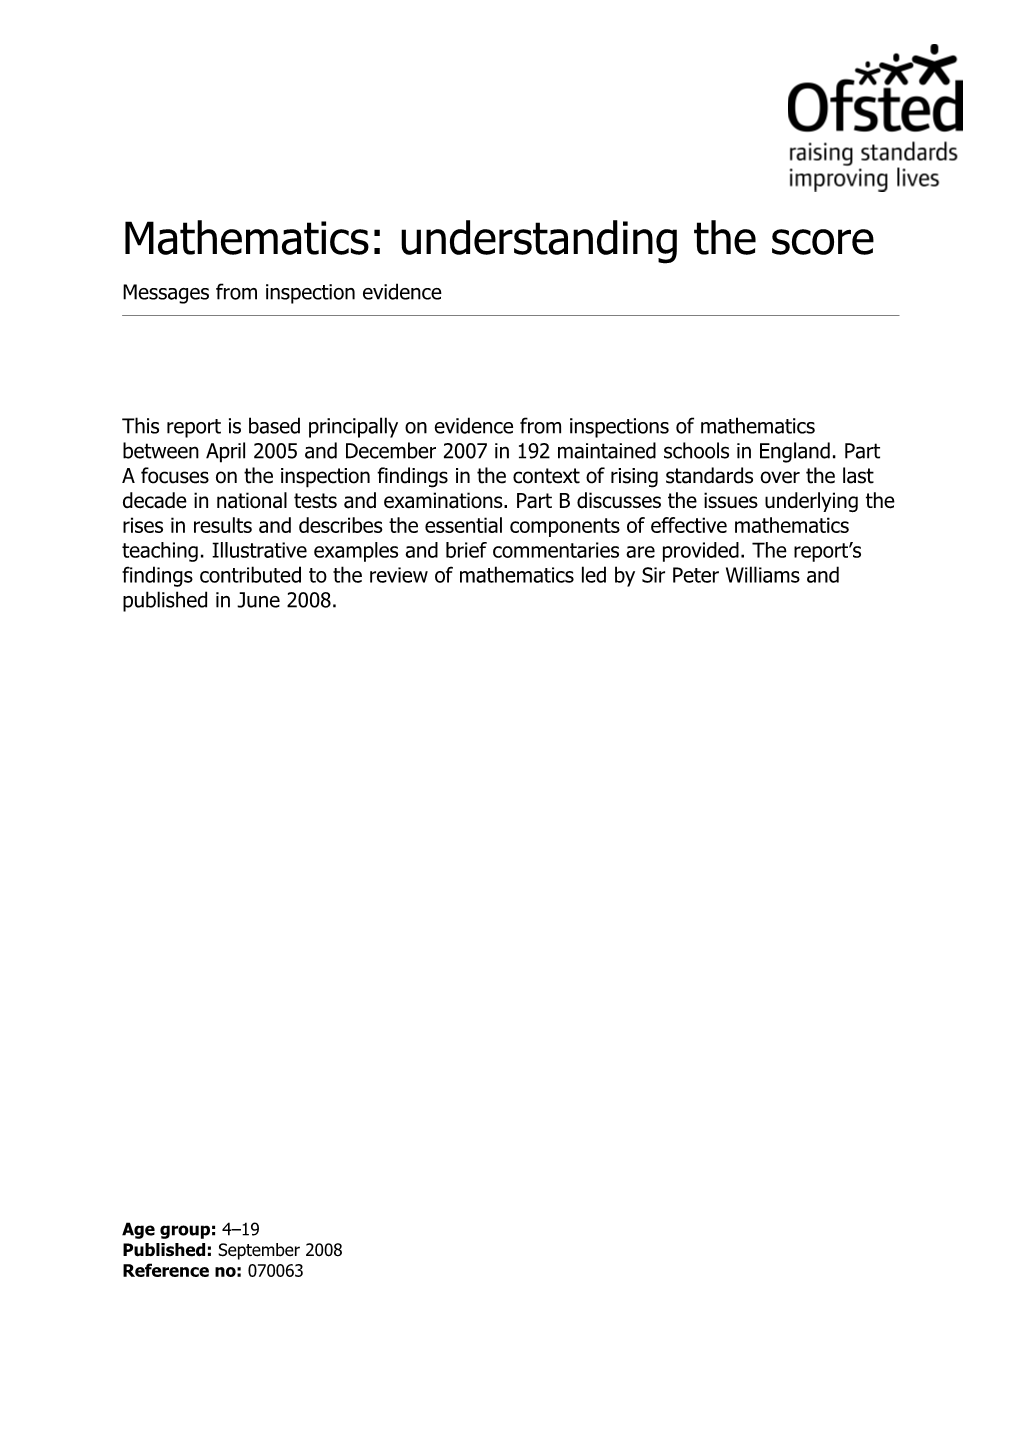 Mathematics: Understanding the Score